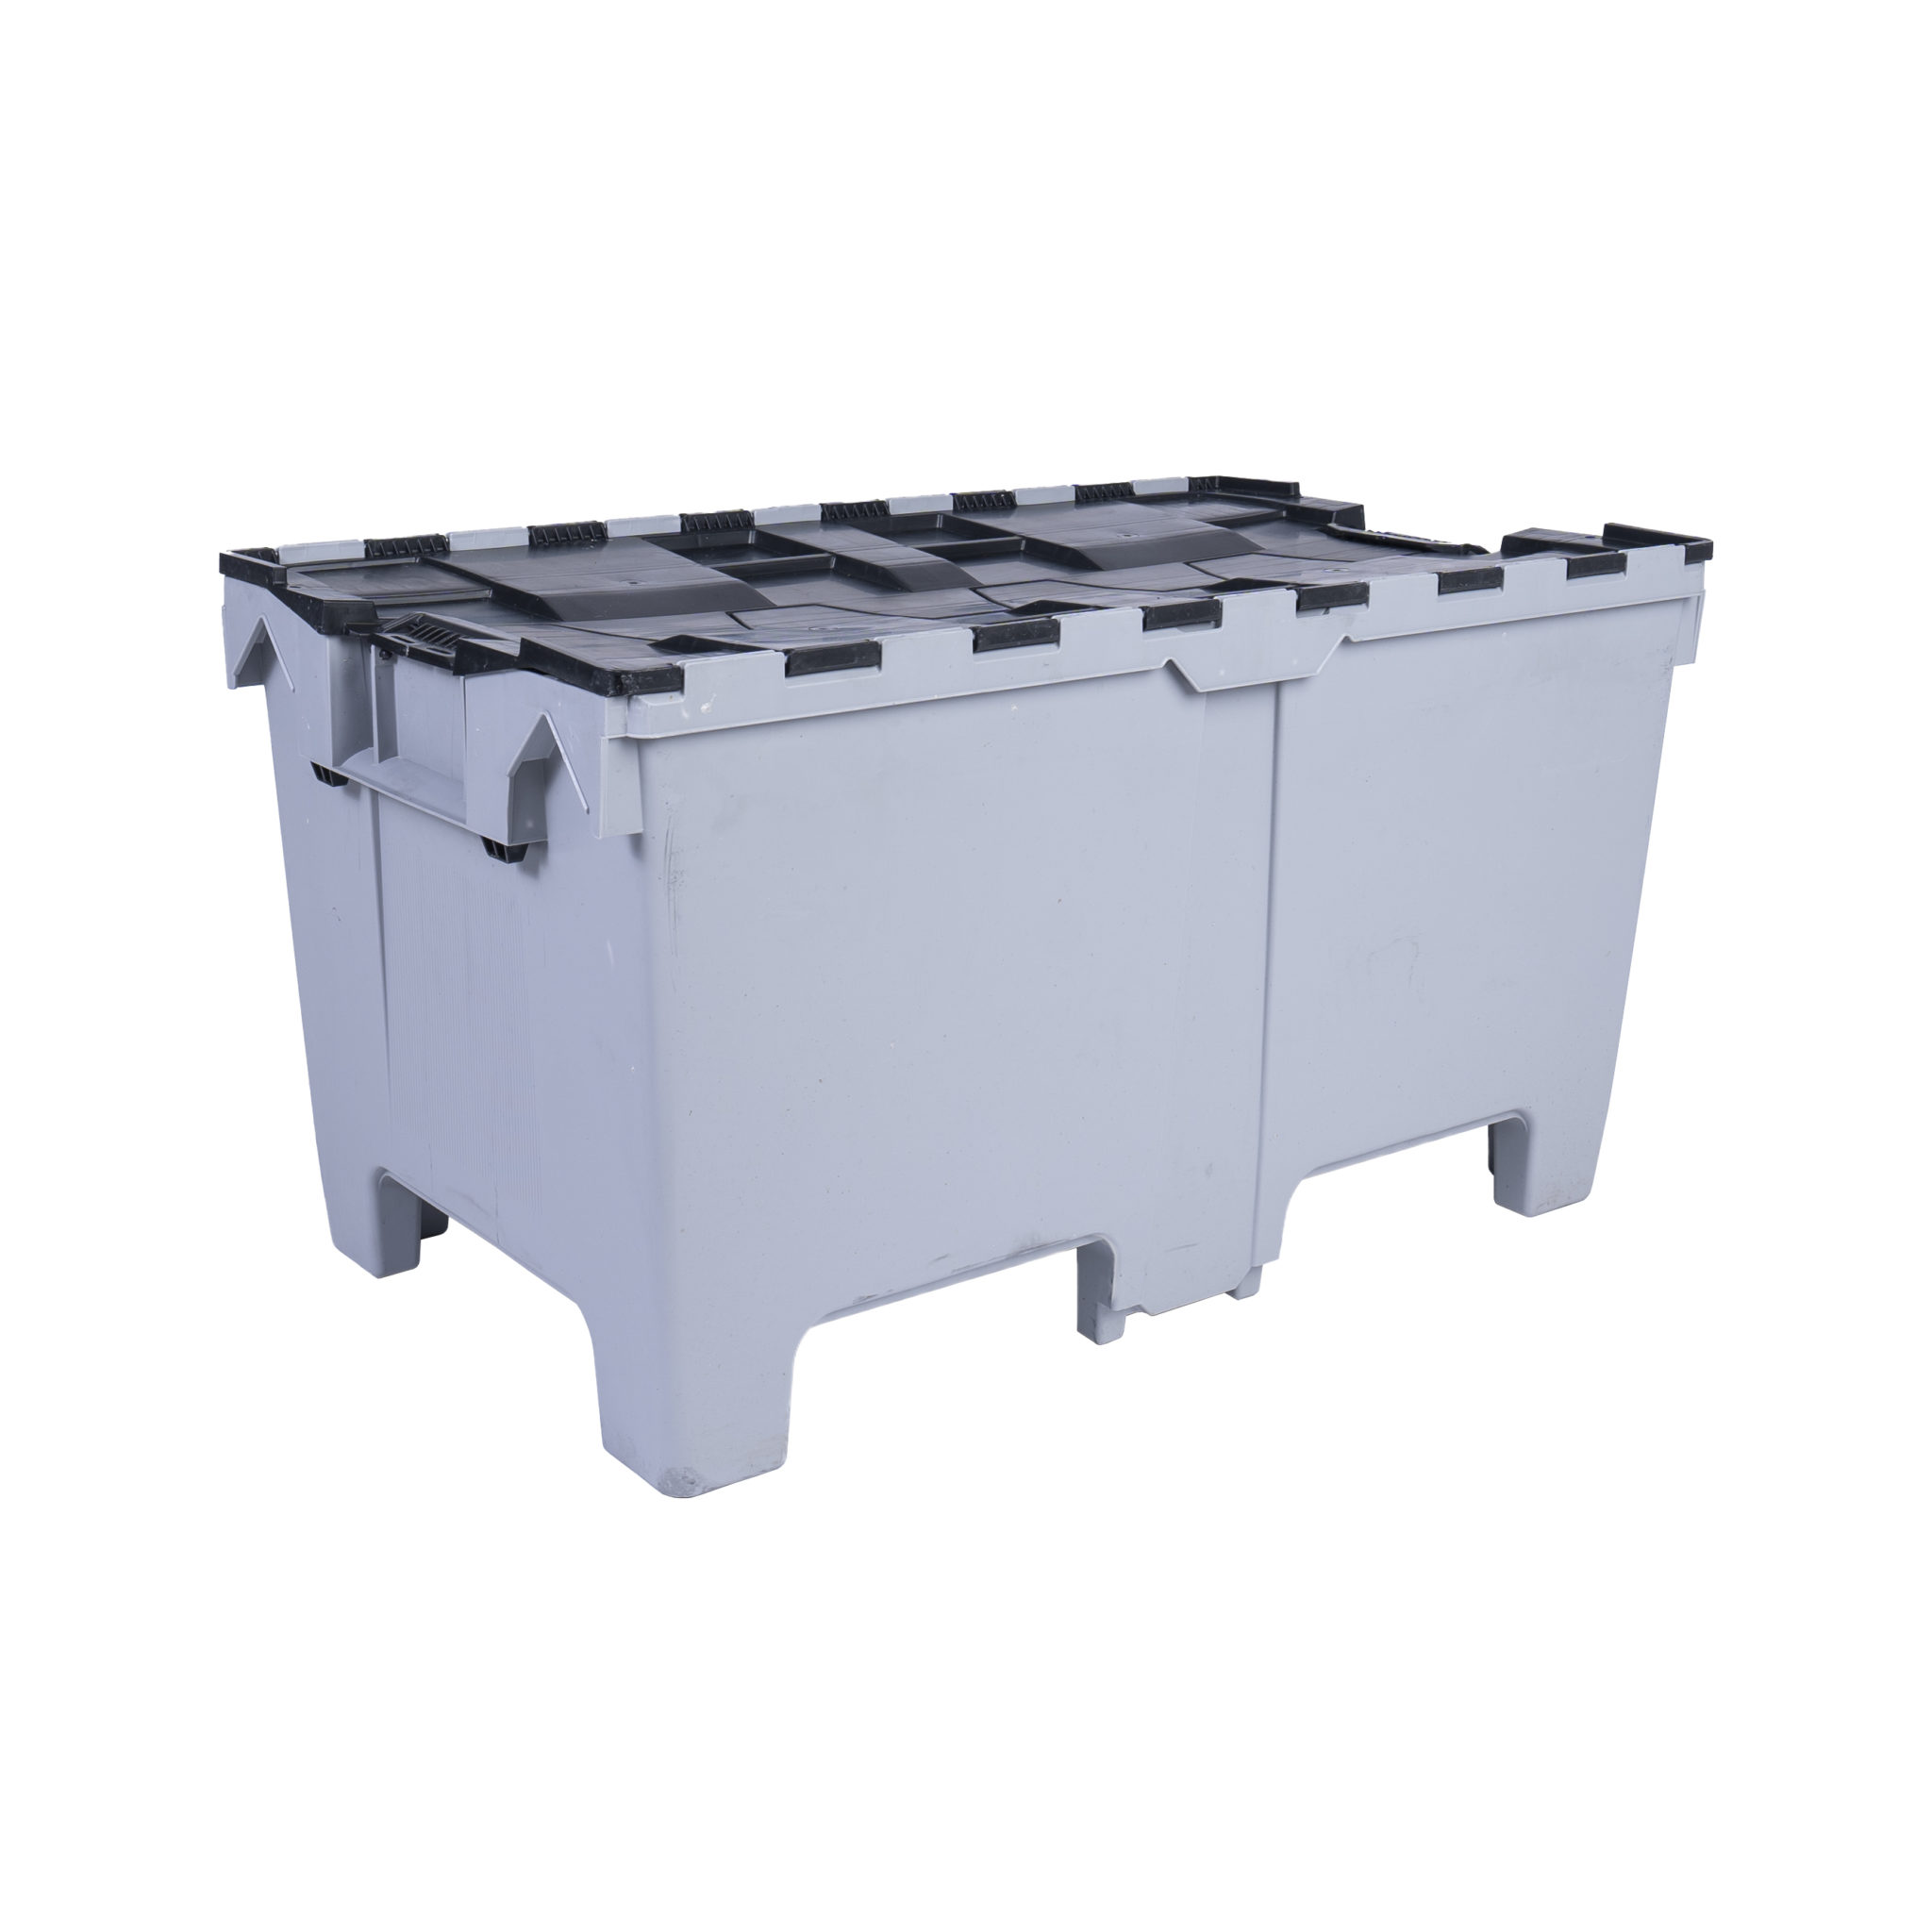 40 x 24 x 21 – Half Pallet Container